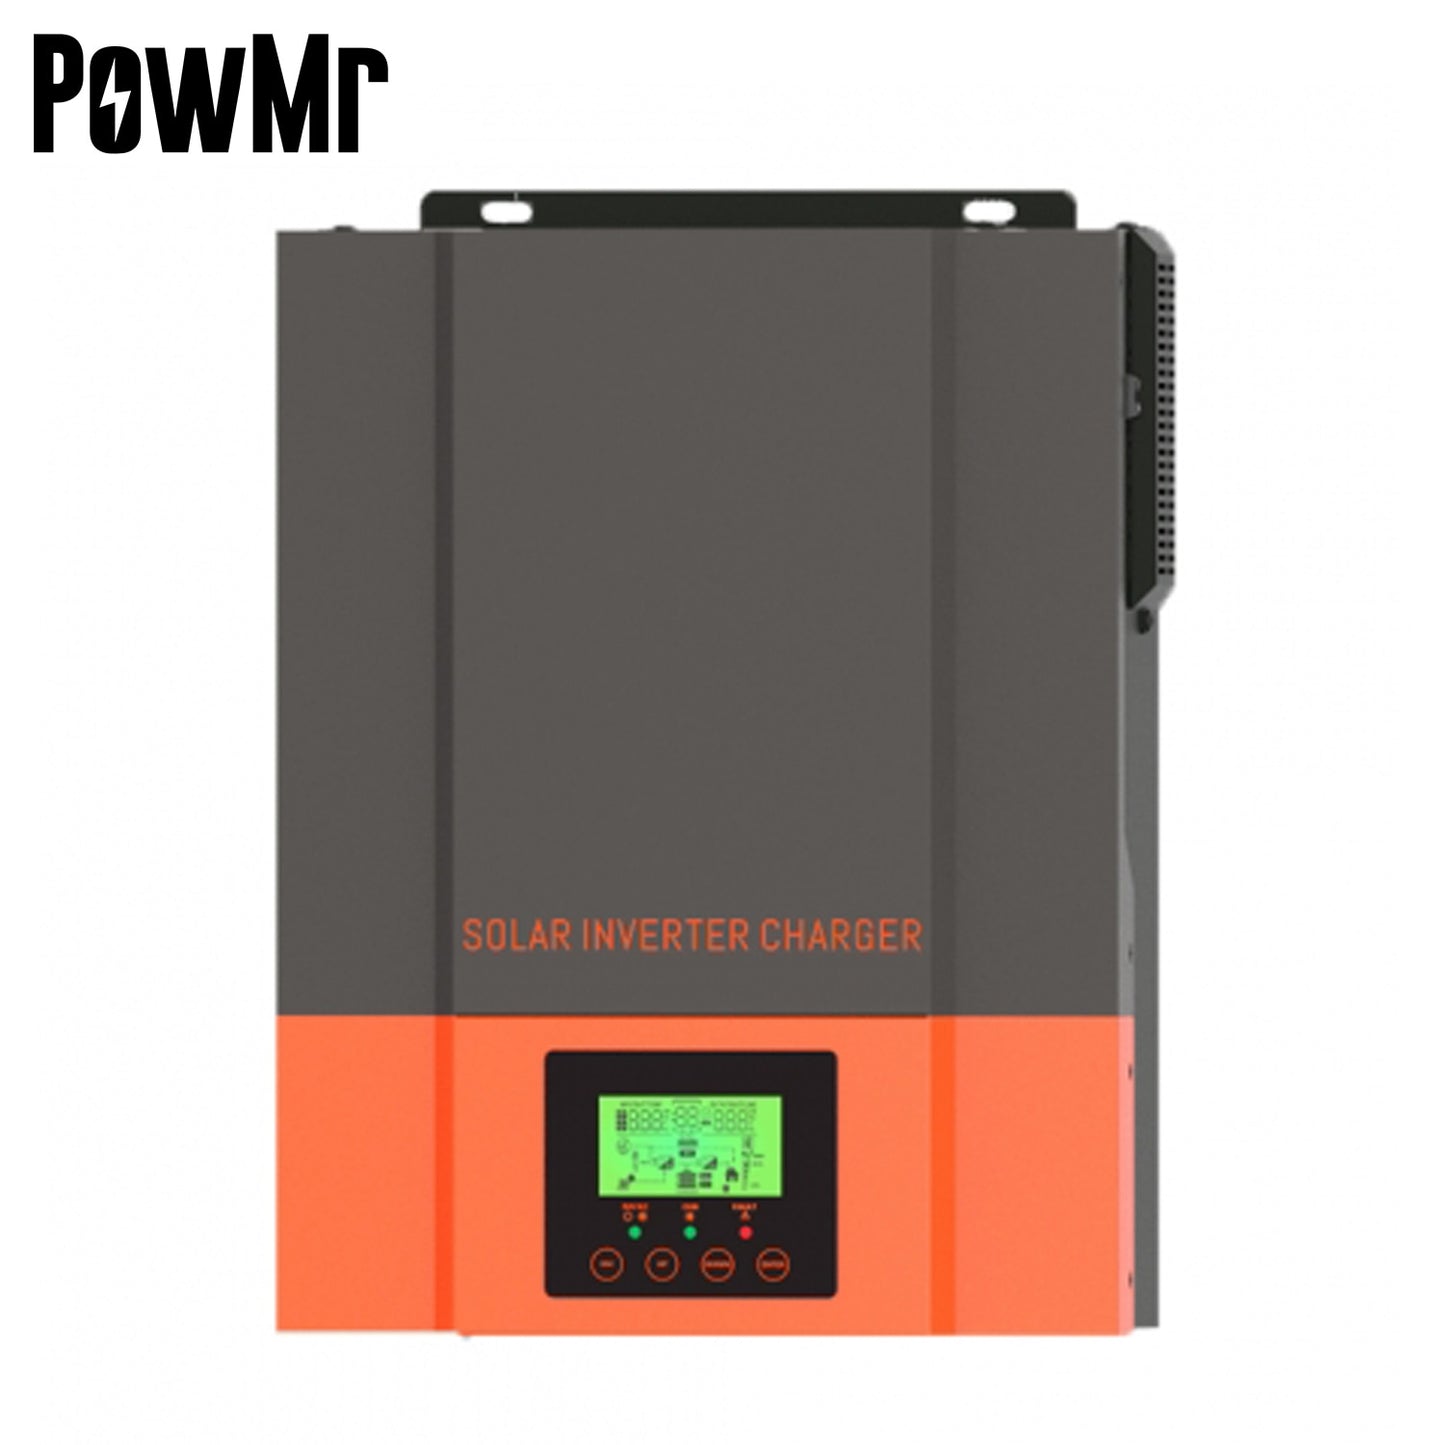 PowMr Hybrid Solar Inverter 1500W 12V 230V PV Max 450V Built in 80A MPPT Solar Controller Inversor a onda sinusoidale pura 1.5KW